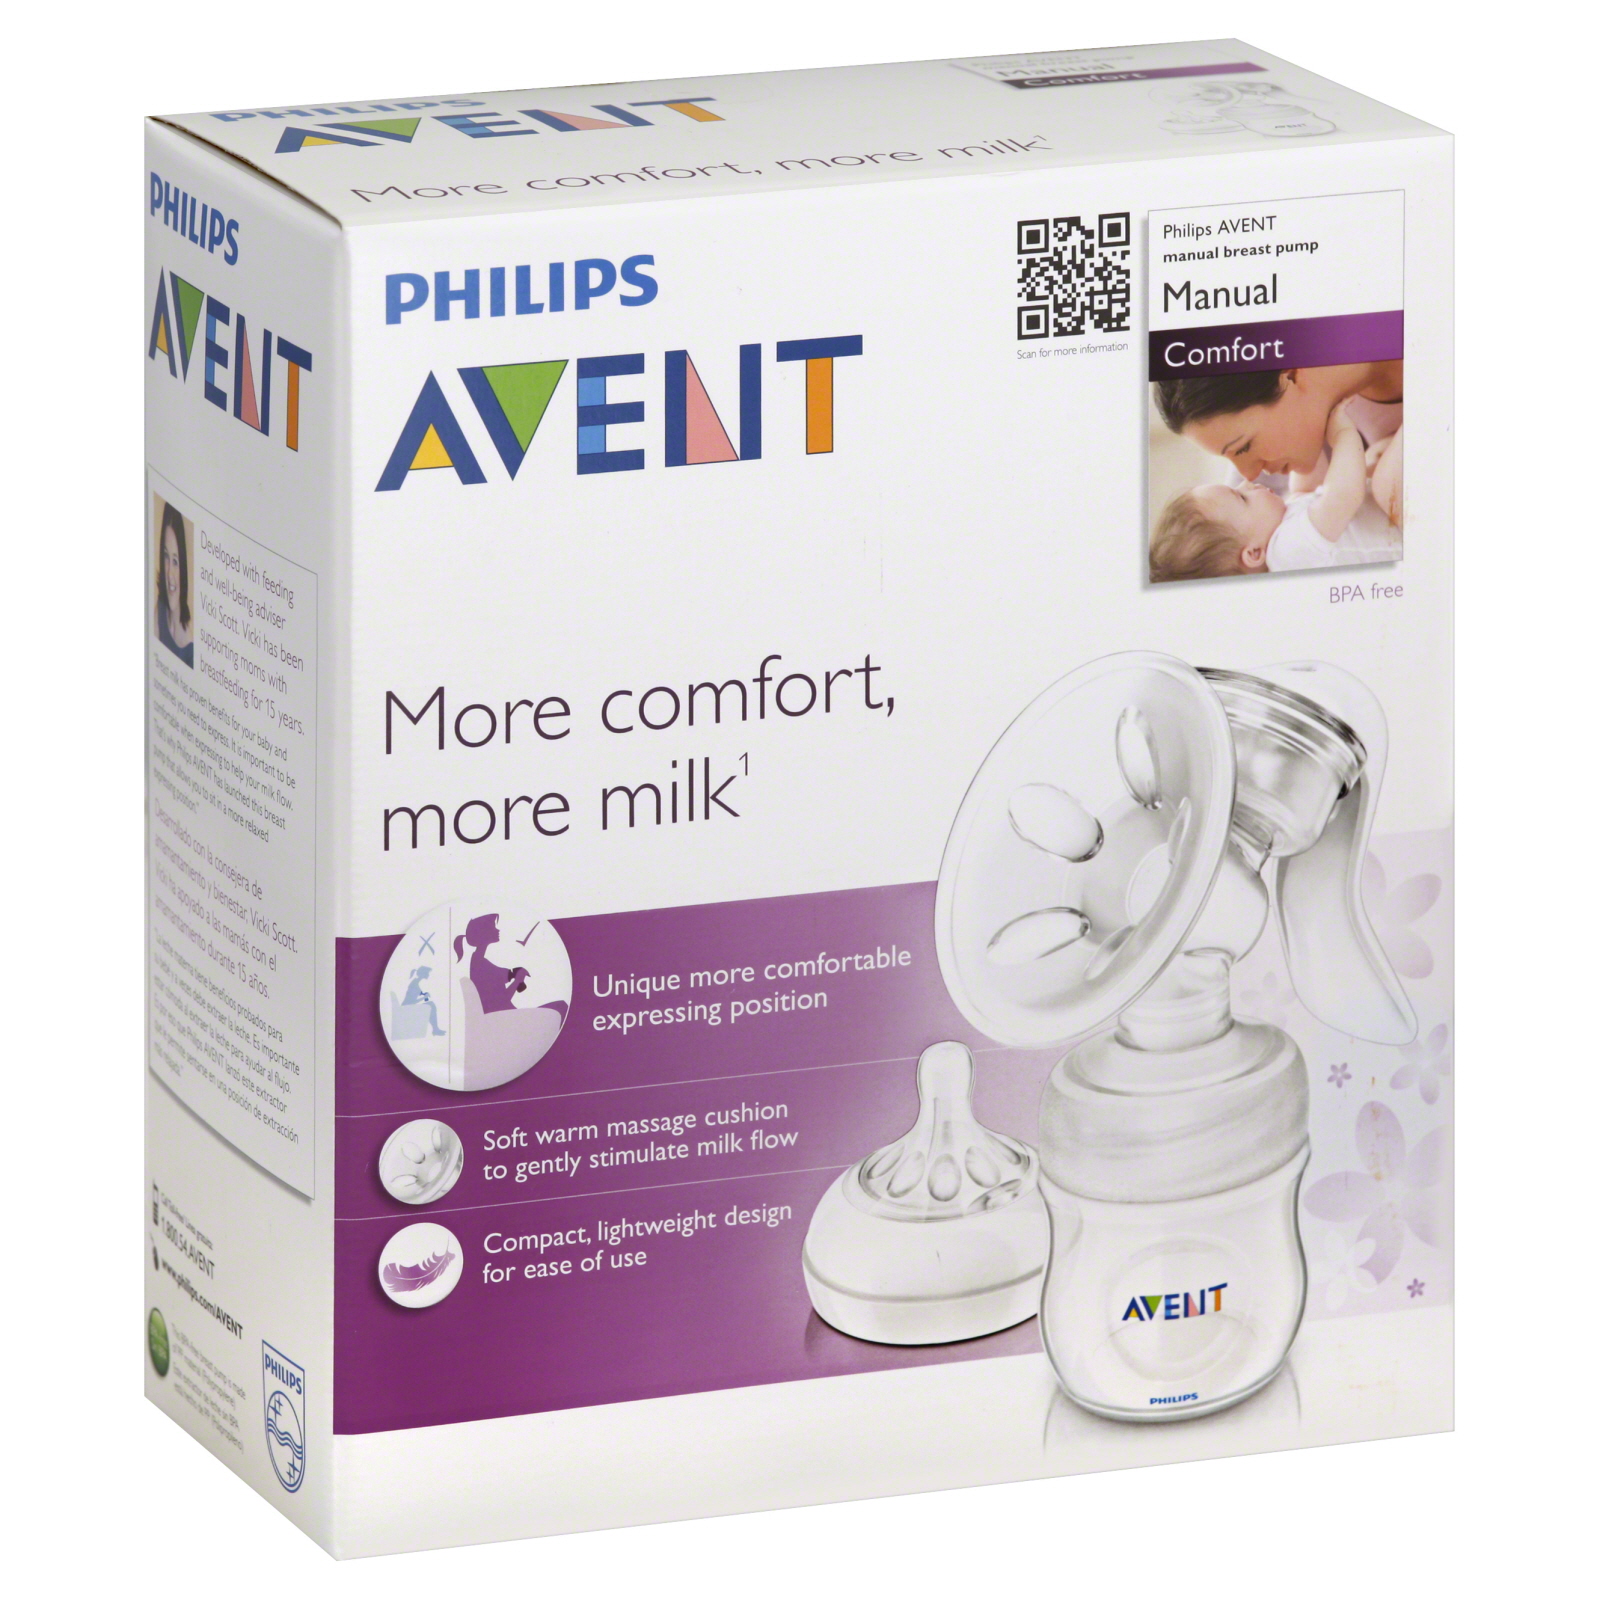  Philips Avent Manual Comfort Breast Pump : Manual Breast  Feeding Pumps : Baby